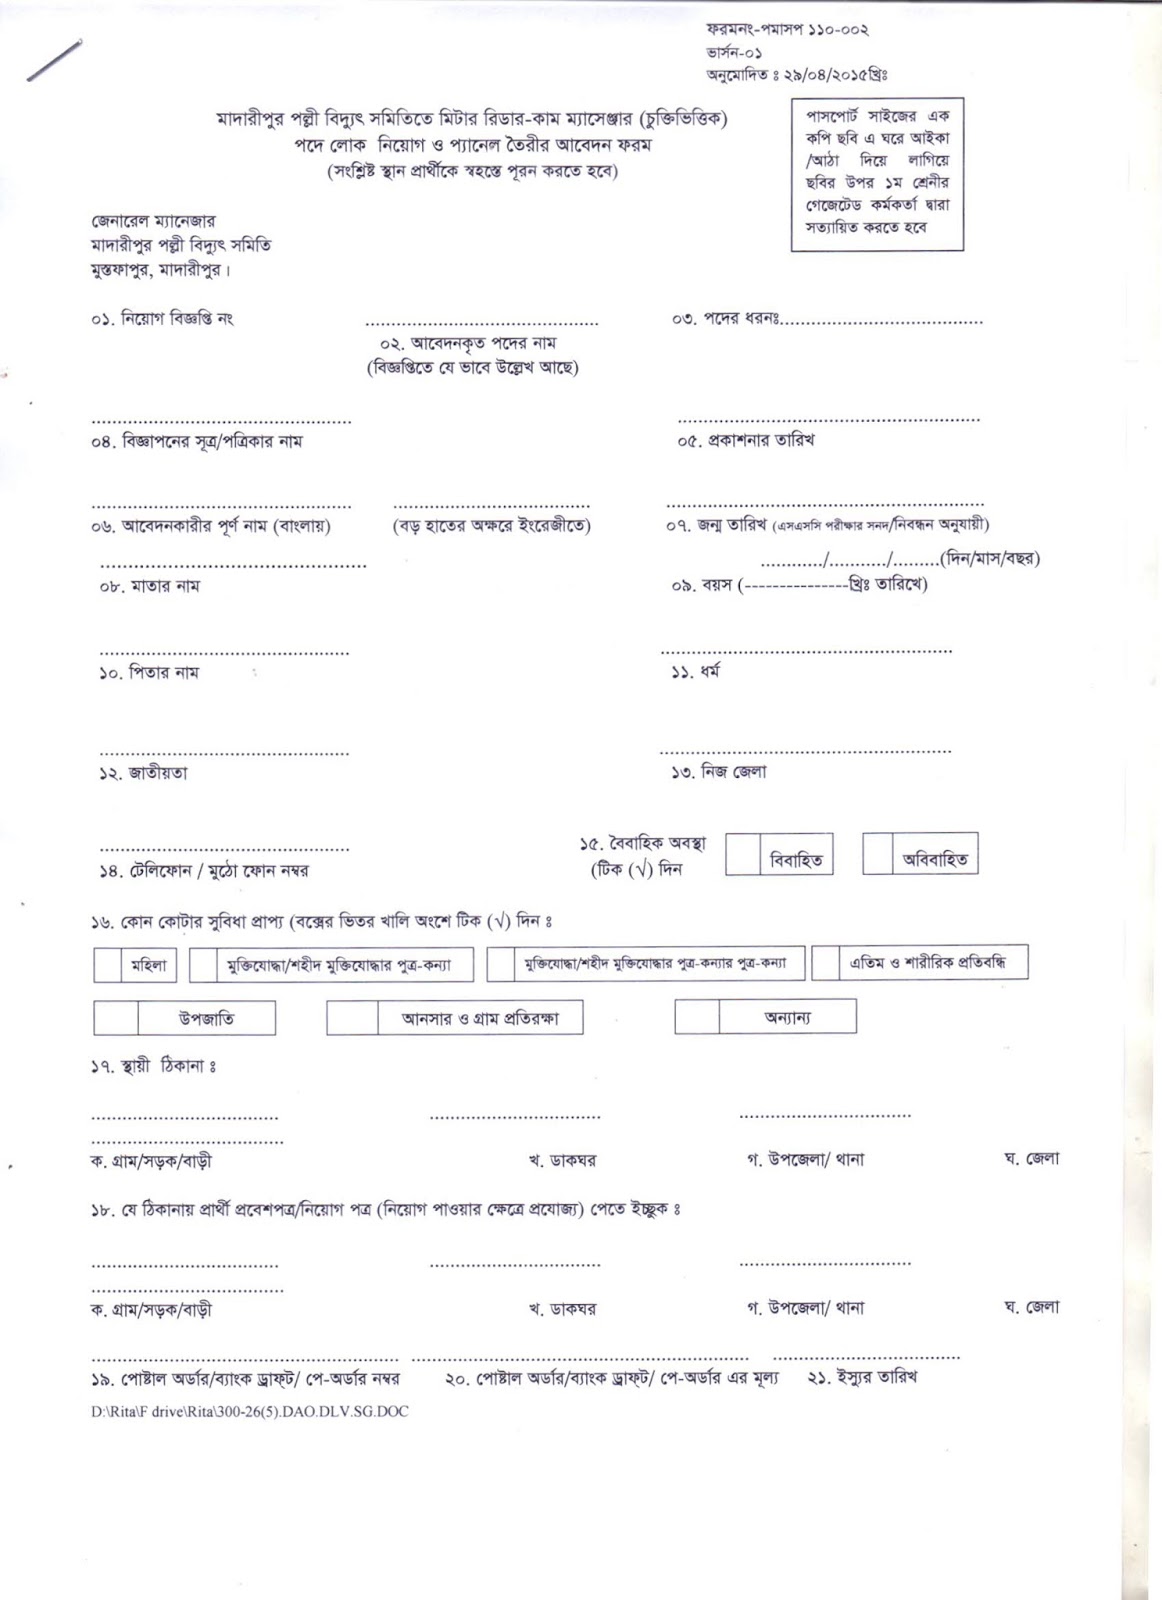 Madaripur Palli Bidyut Samity Job Application Form